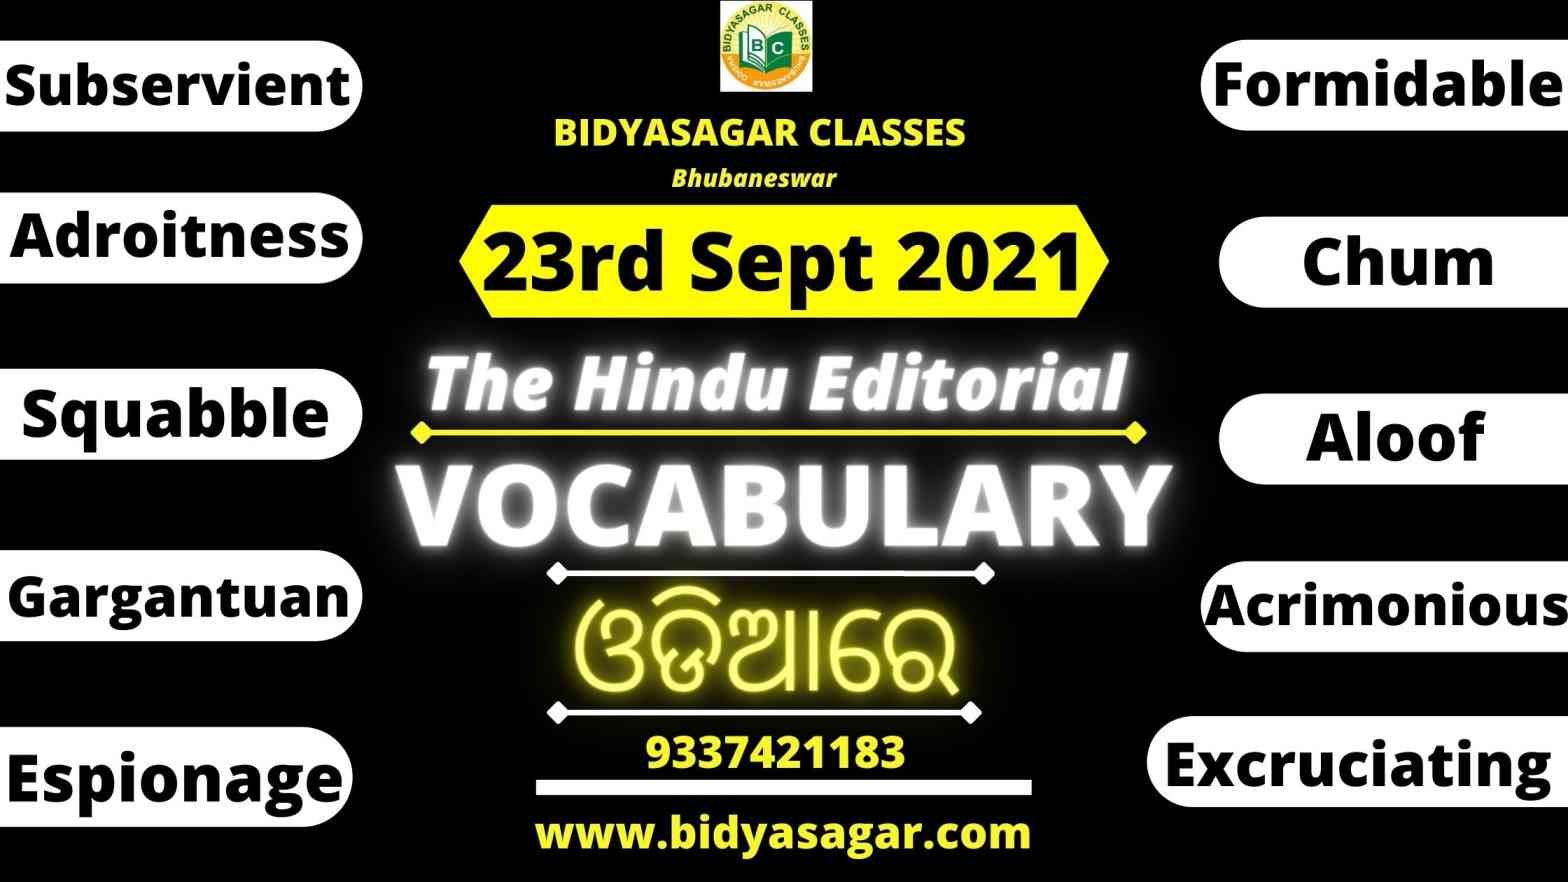 The Hindu Editorial Vocabulary of 23rd September 2021